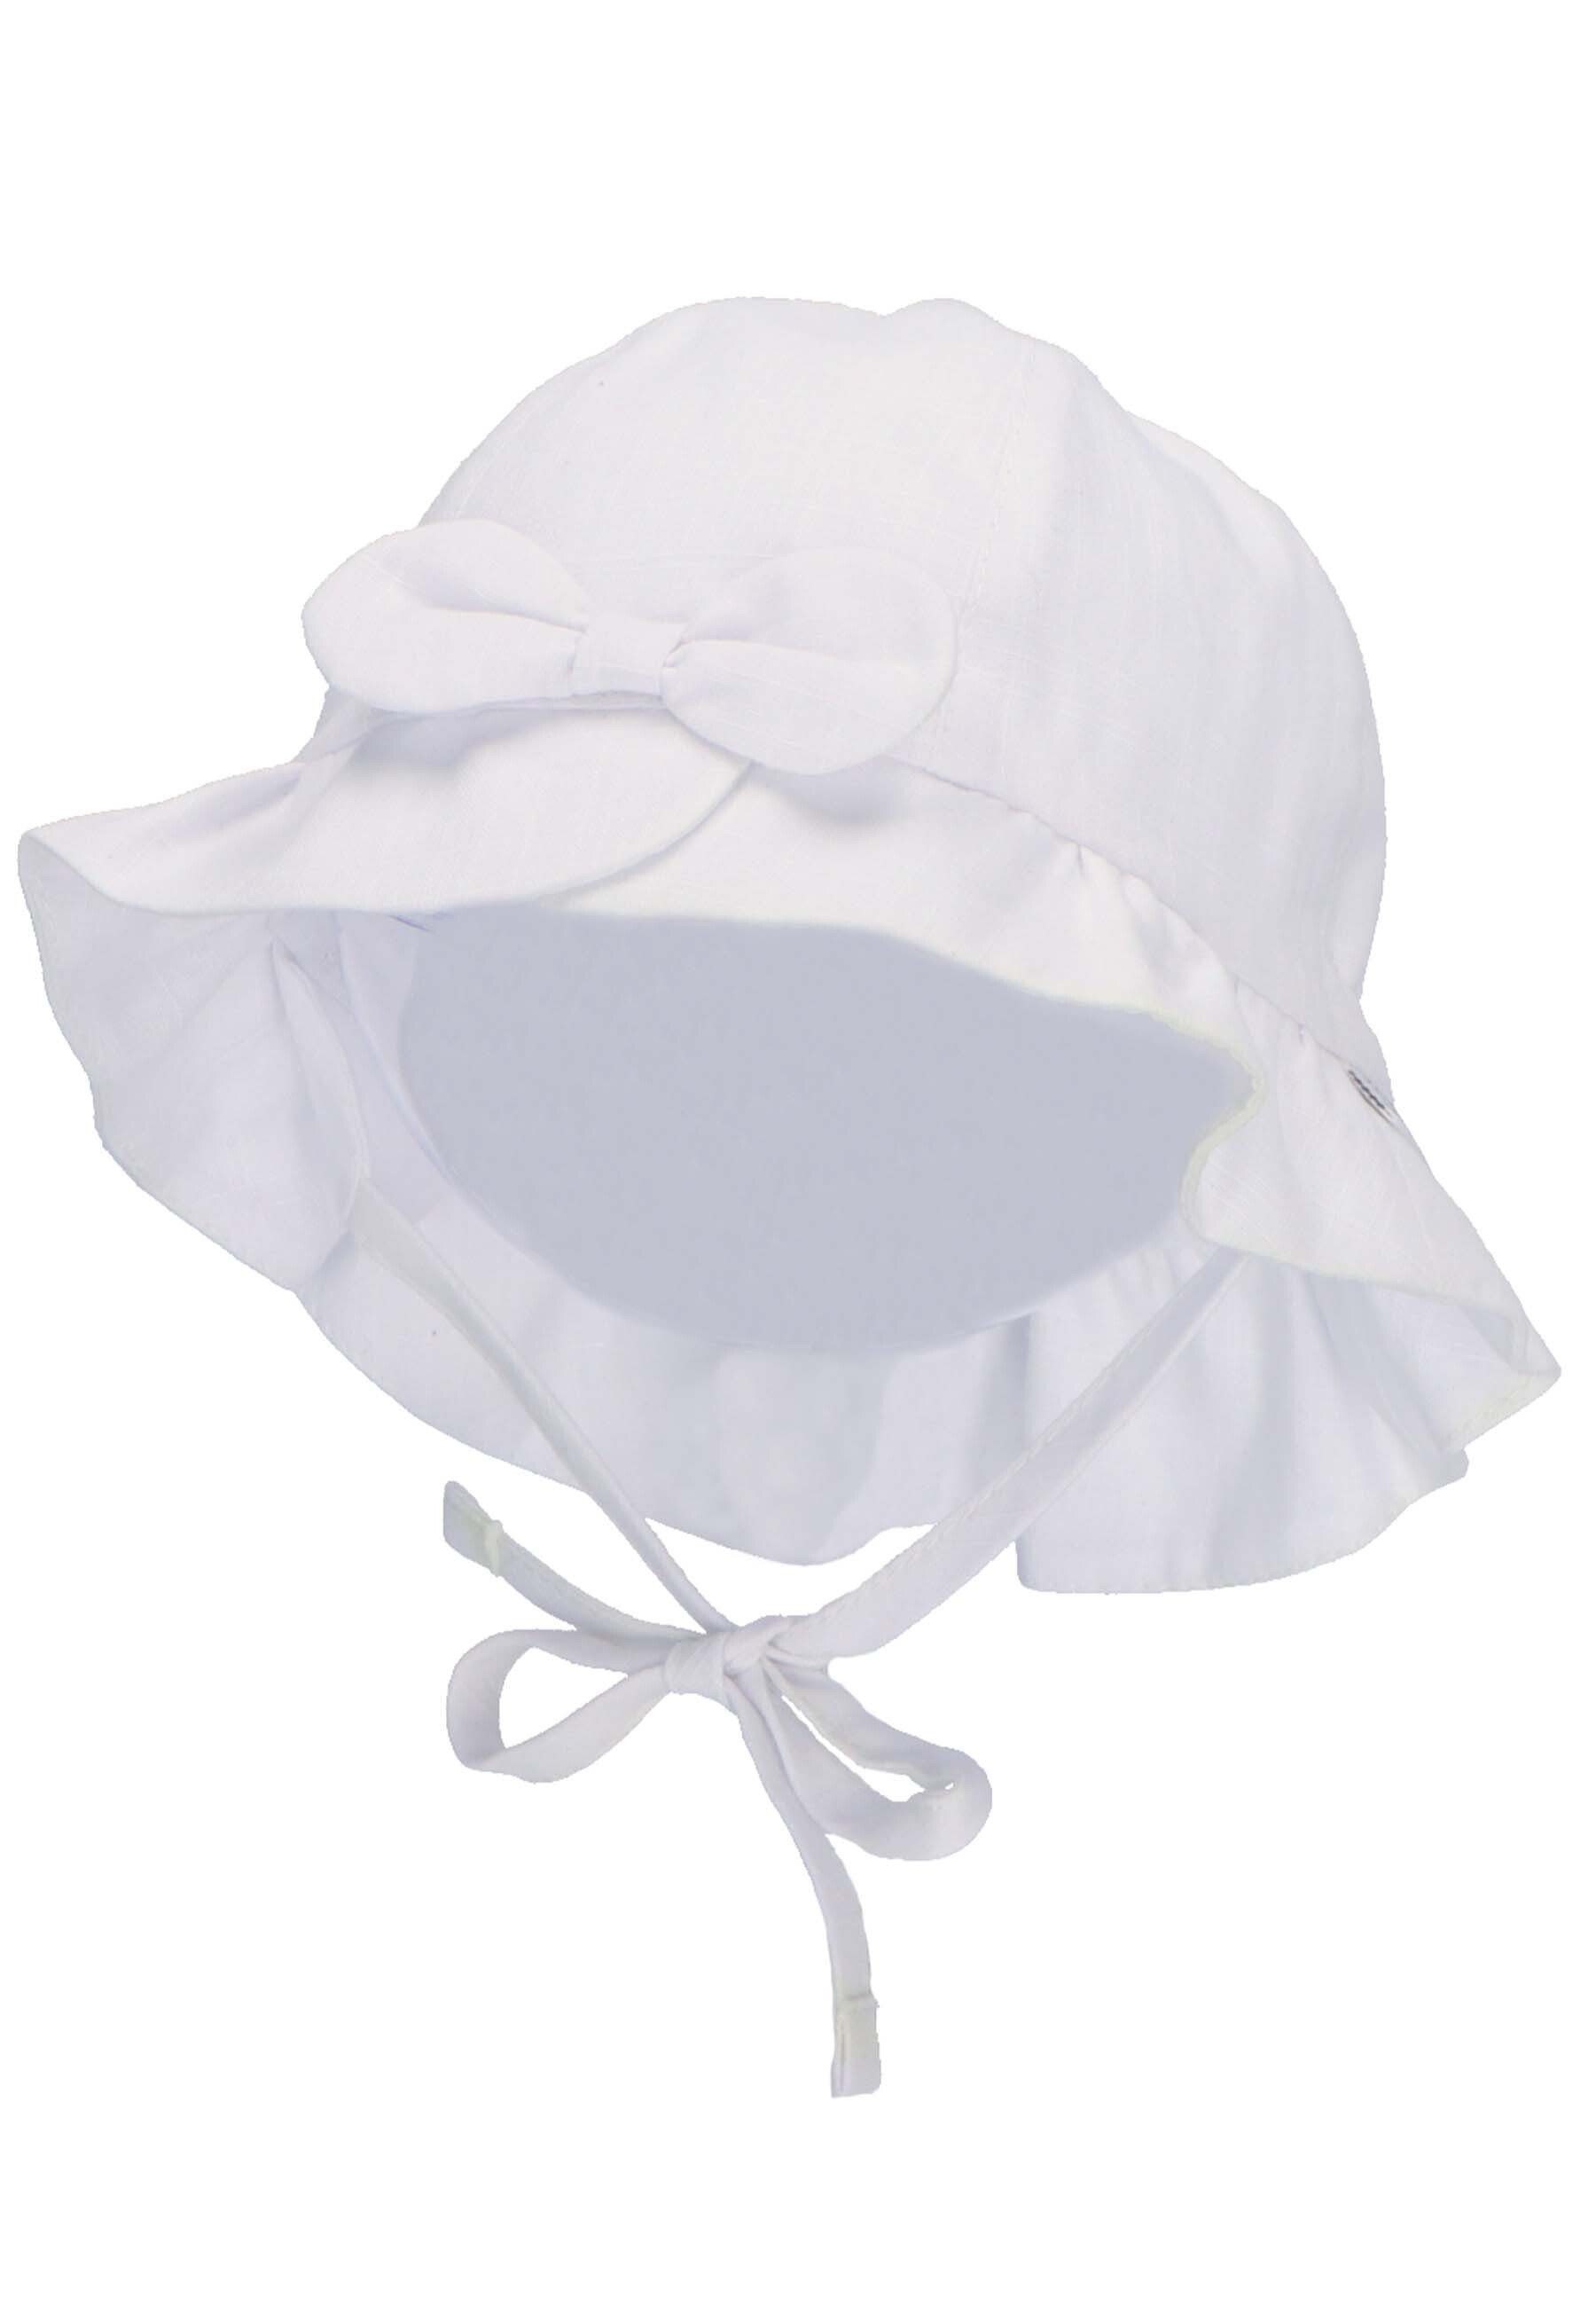 (1-St) Ballonmütze Hut Sterntaler® weiß Leinencharakter